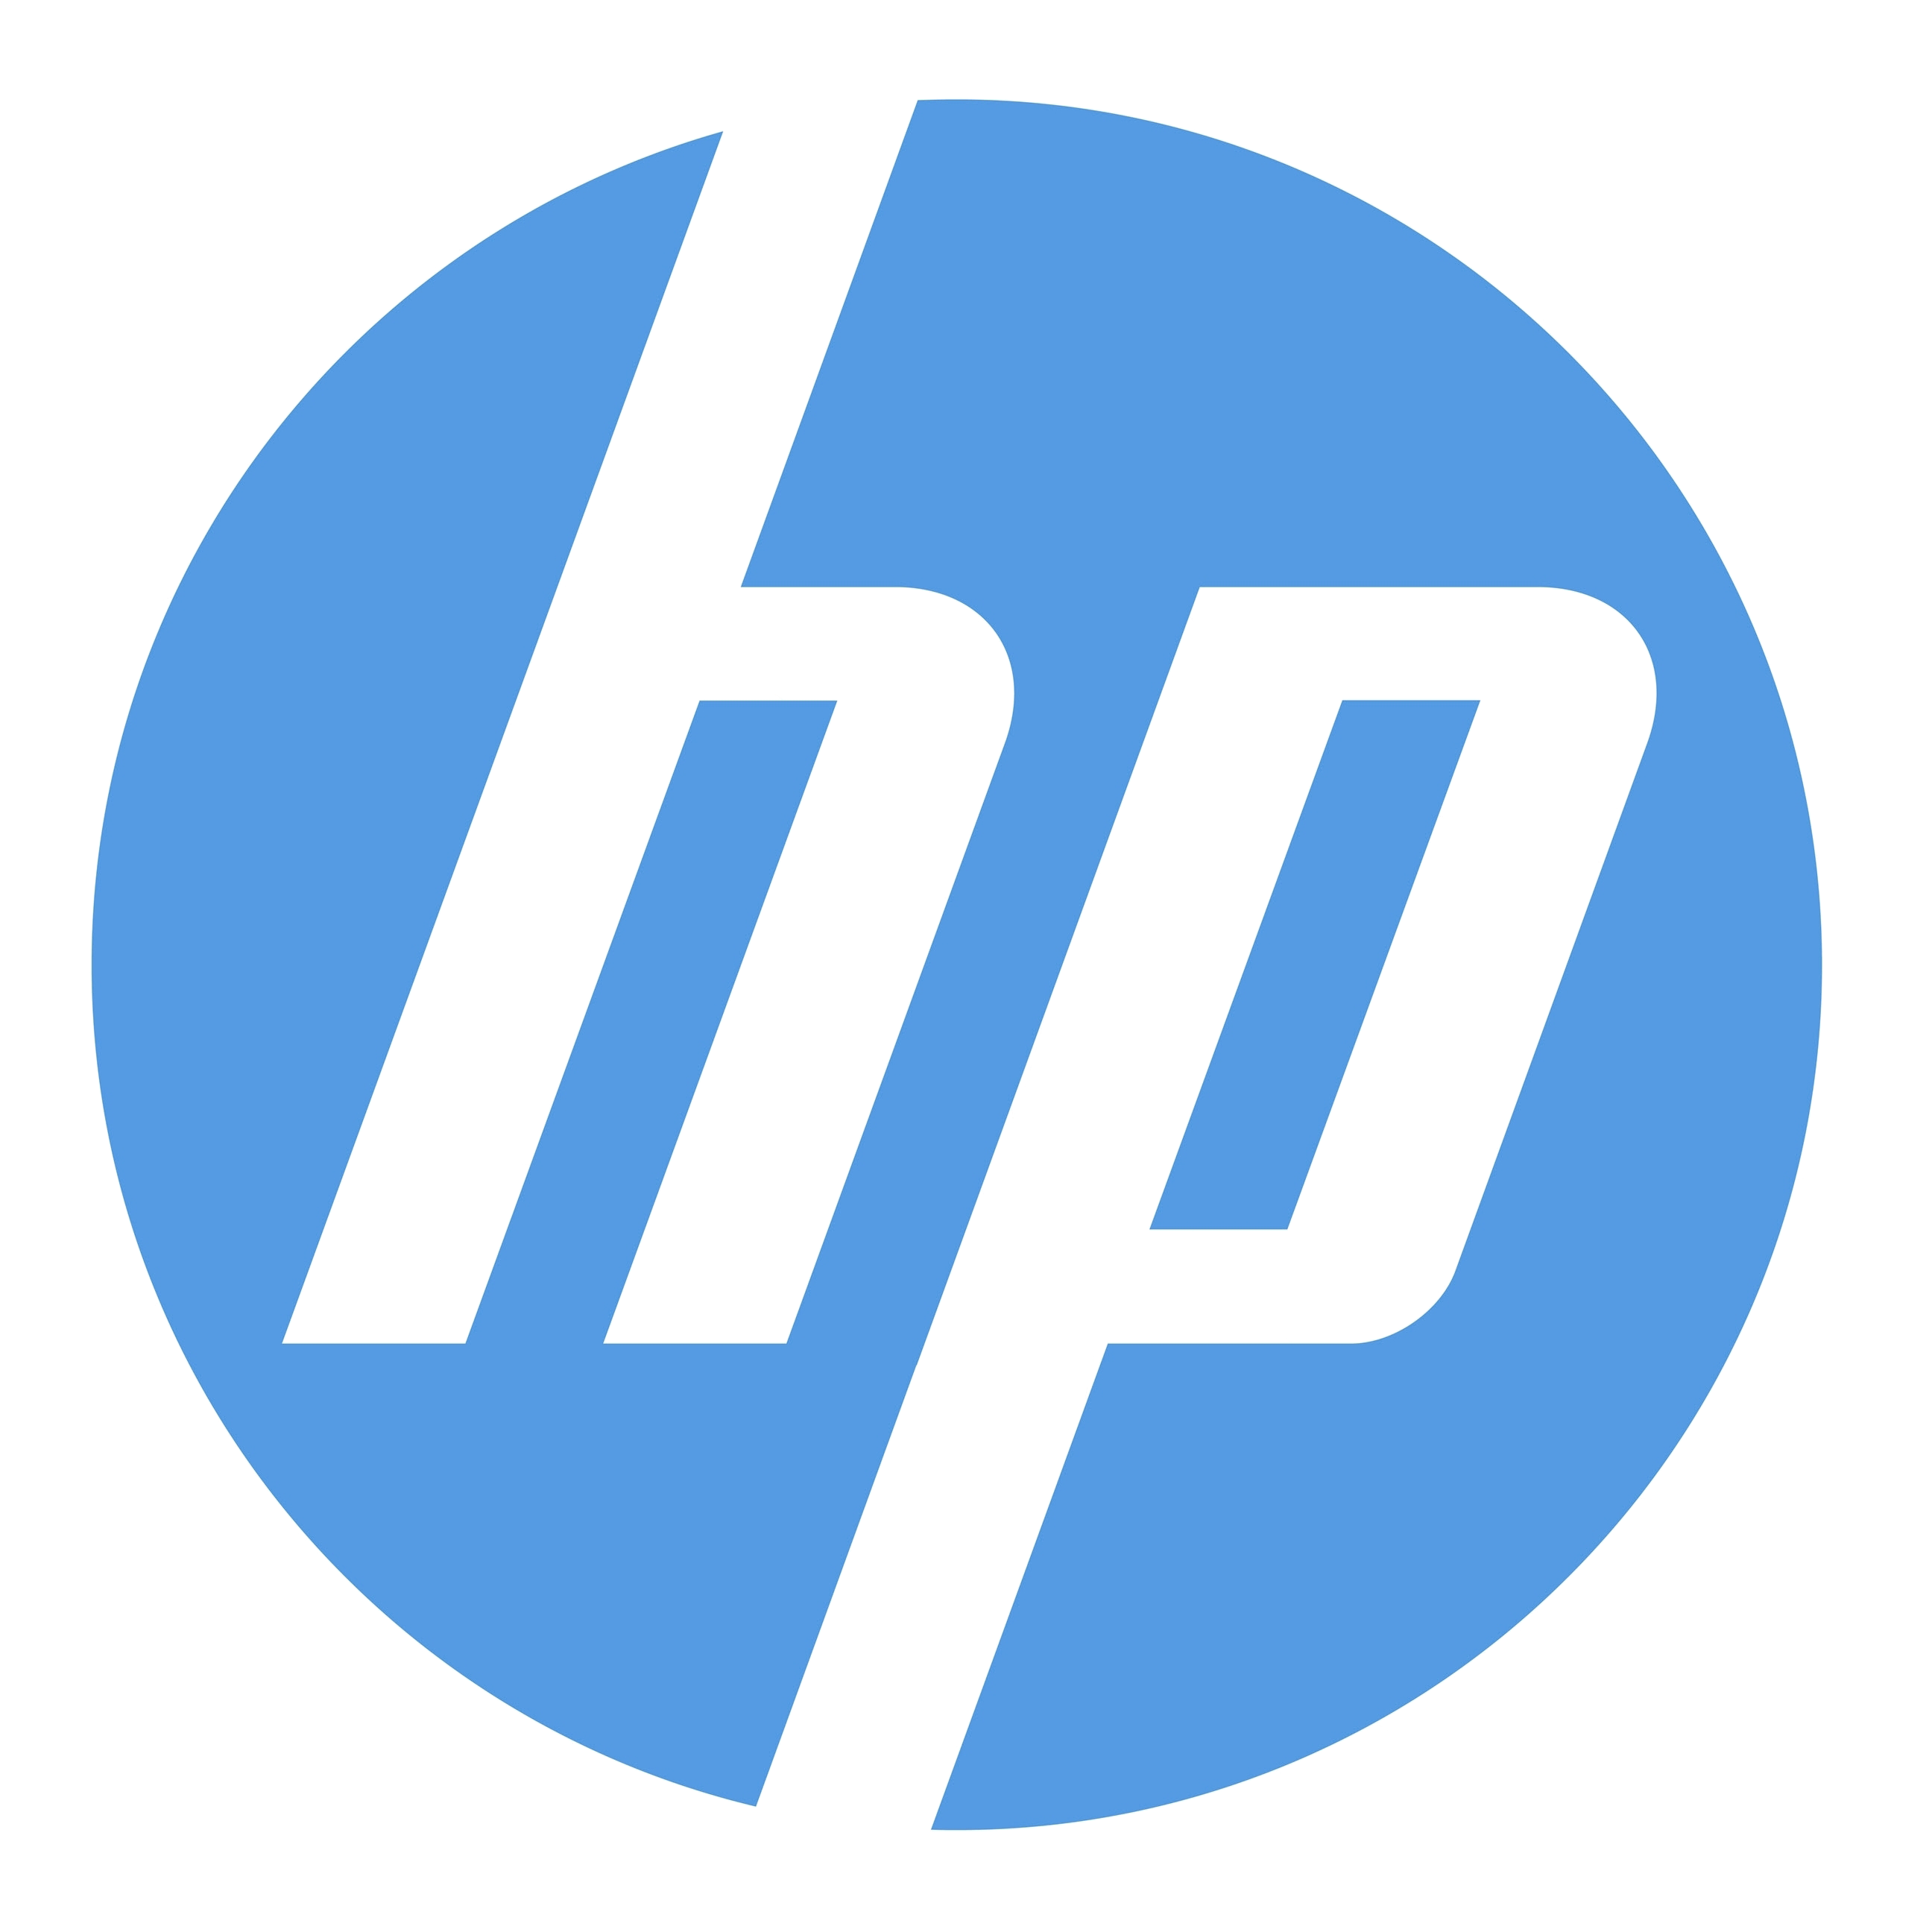 HP Logosu PNG Görüntüsü - PurePNG | Ücretsiz şeffaf CC0 PNG Resim Kitaplığı